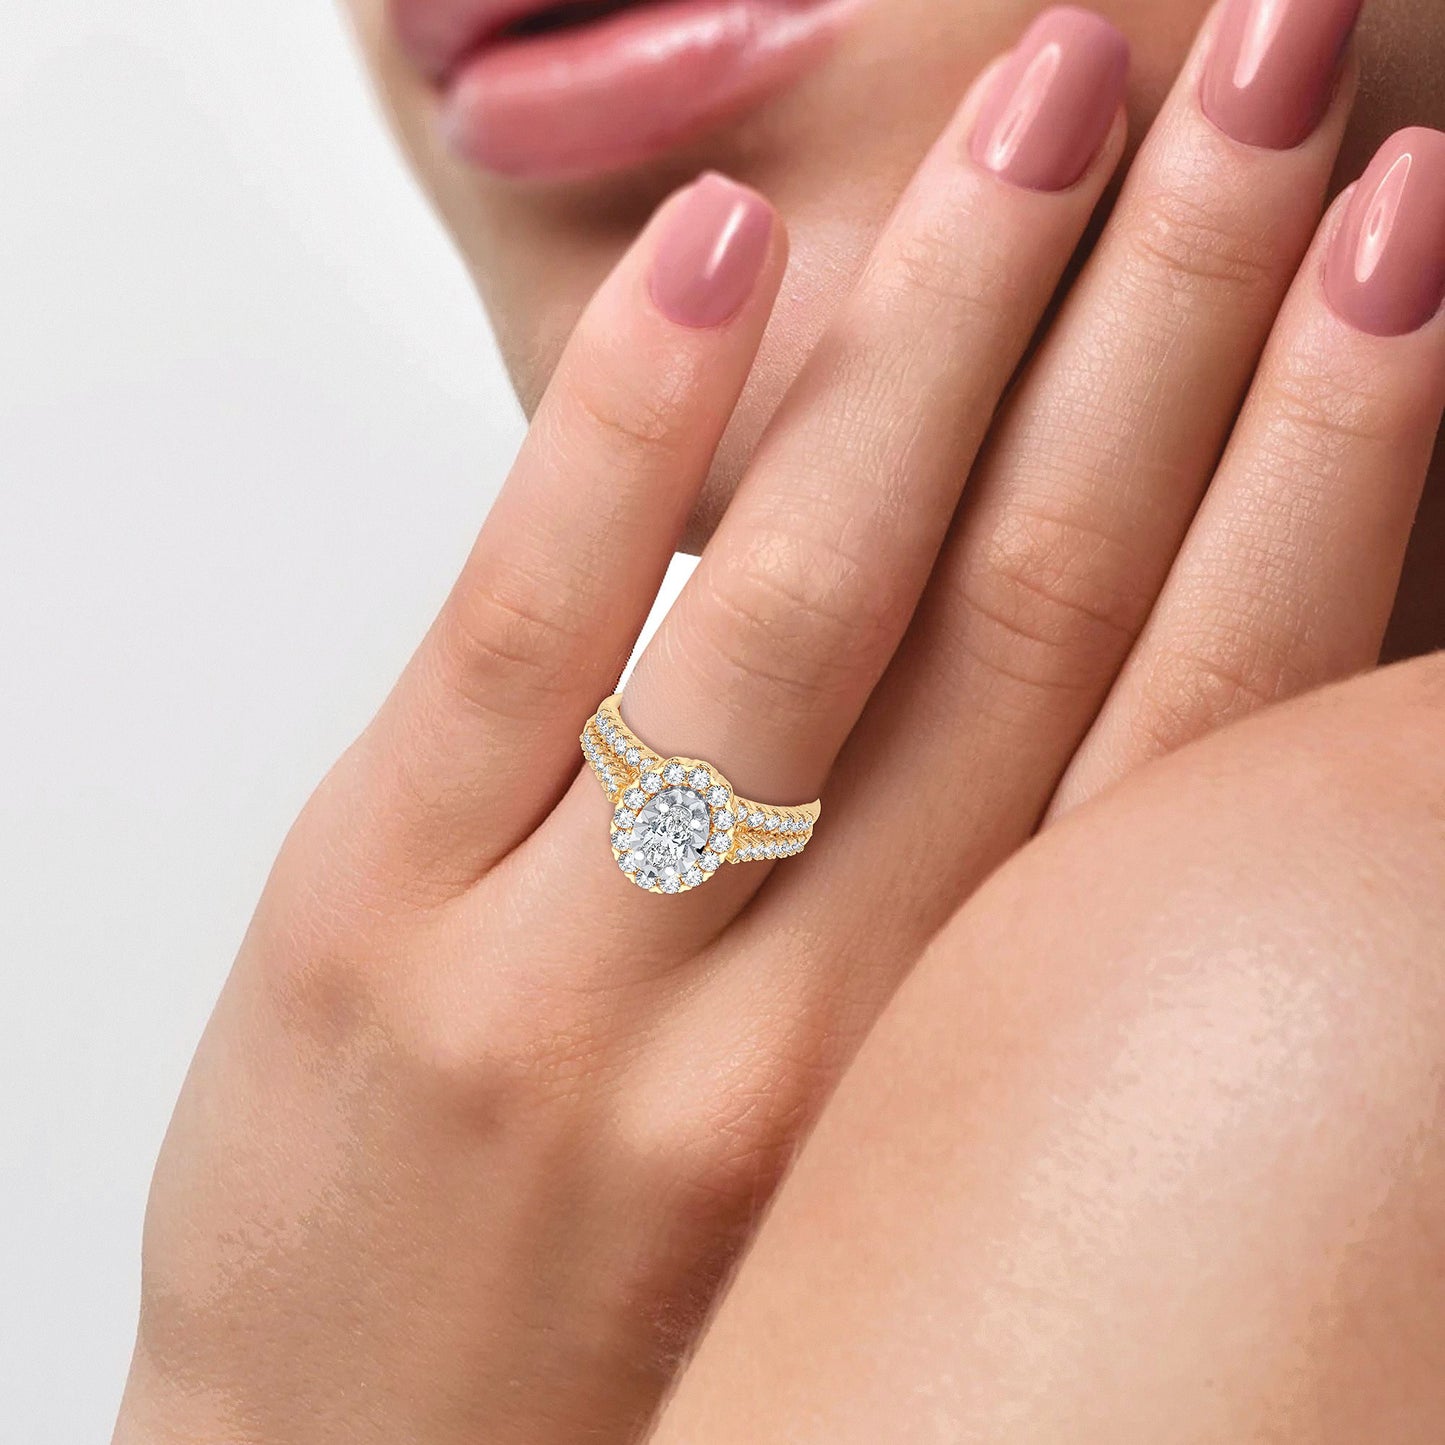 Elegant Allure - 14K Yellow Gold 1.00 CT Diamond Bridal Ring